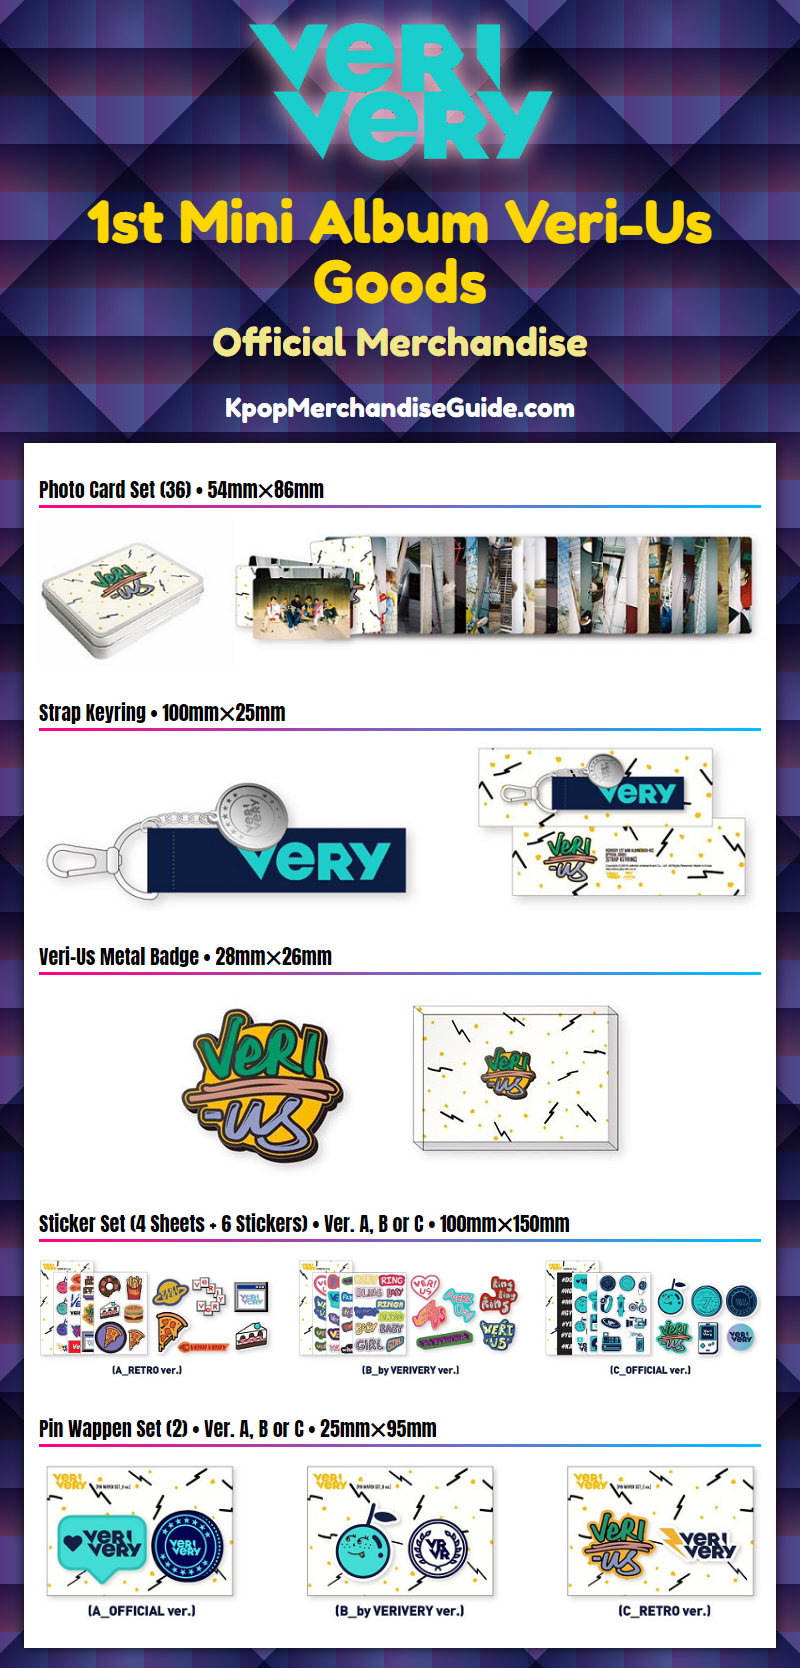 Verivery 1st Mini Album Veri-Us Merchandise